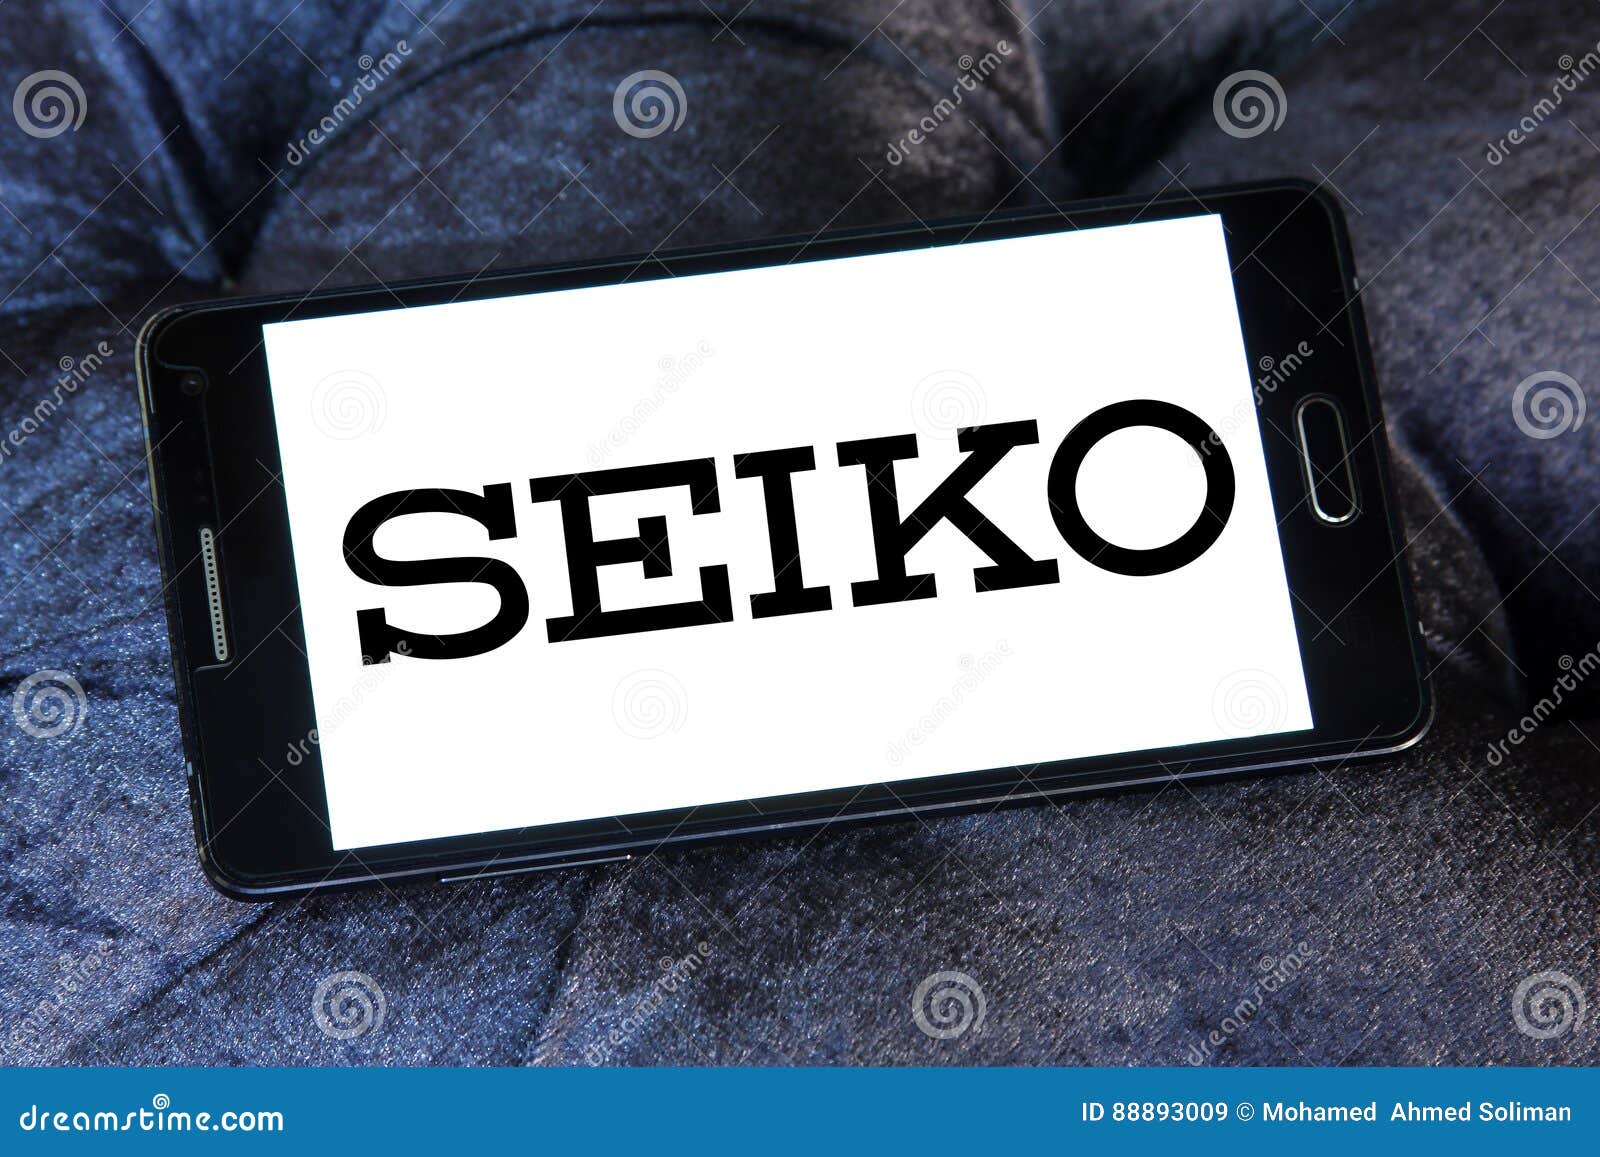 Seiko logo editorial stock image. Image of luxury, mobile - 88893009